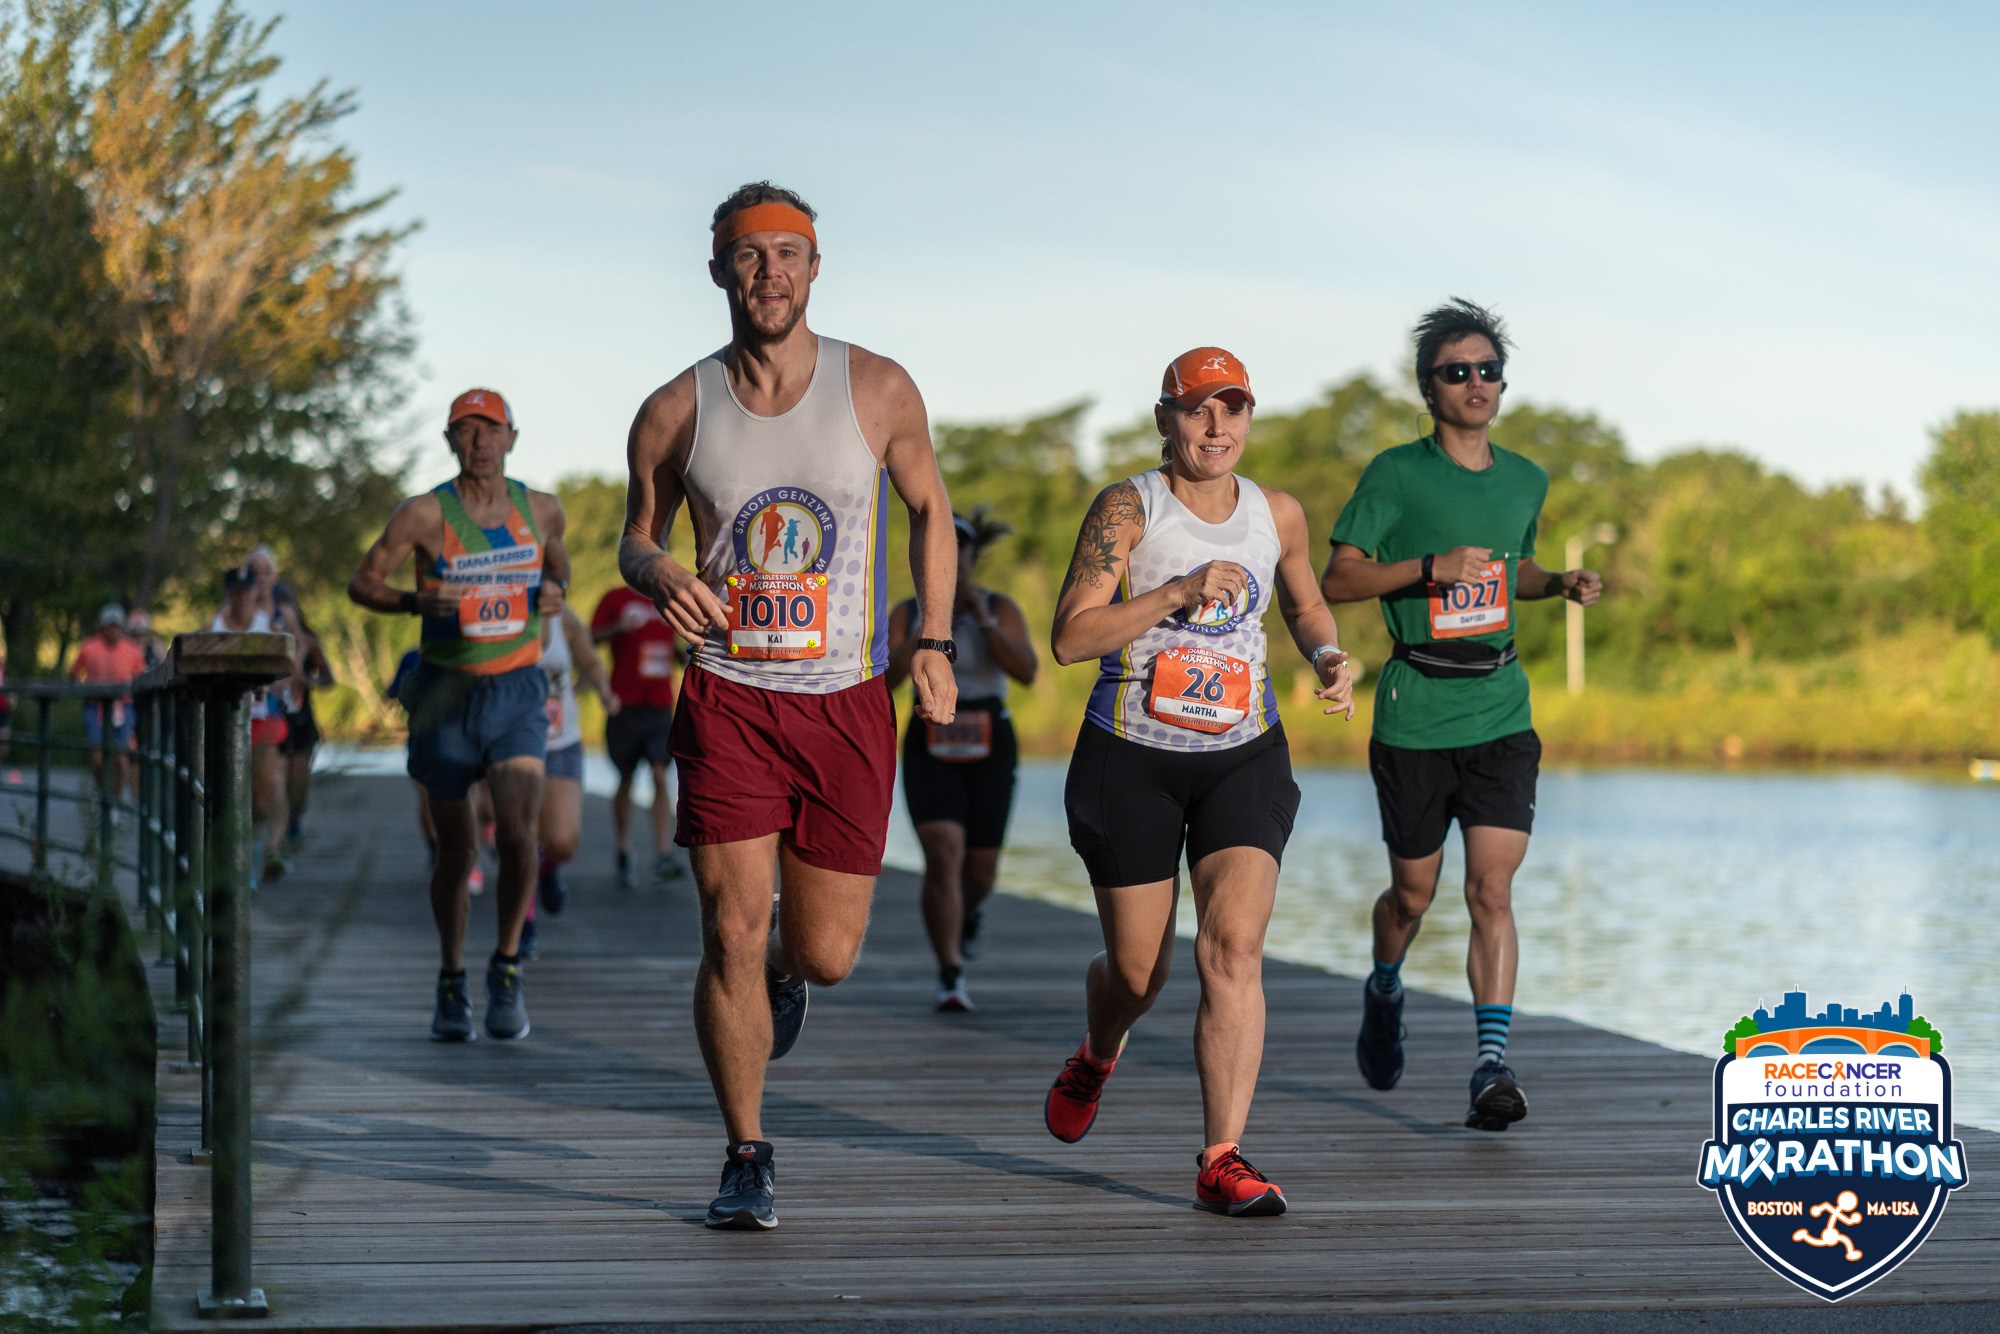 Charles River Marathon RACE Cancer Foundation